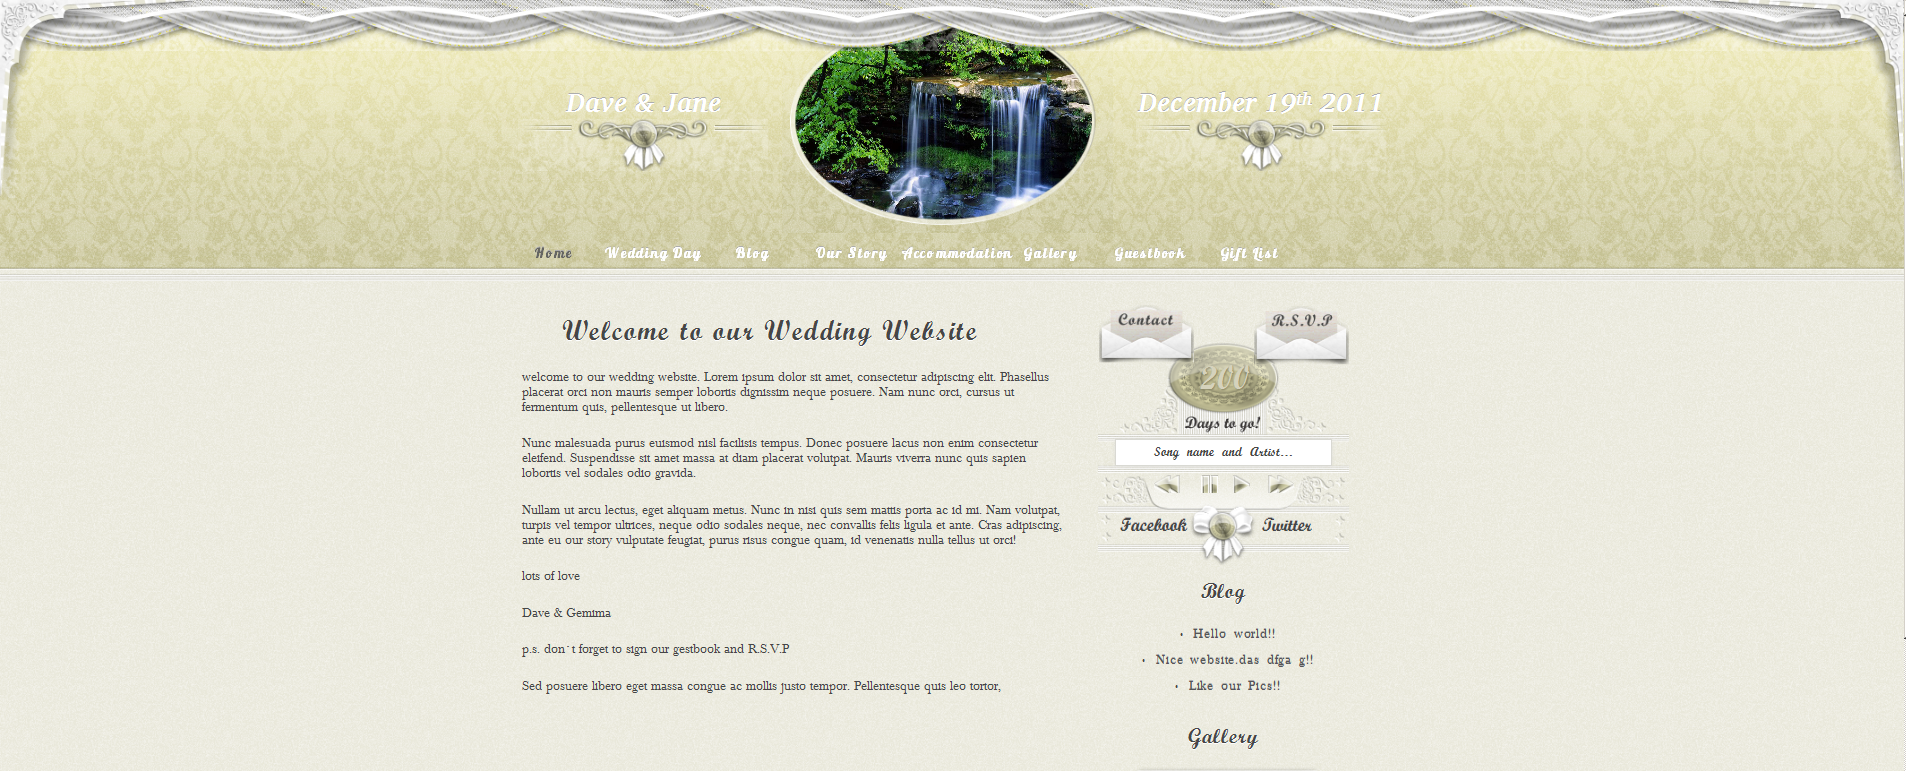 personal wedding website screenshot 11